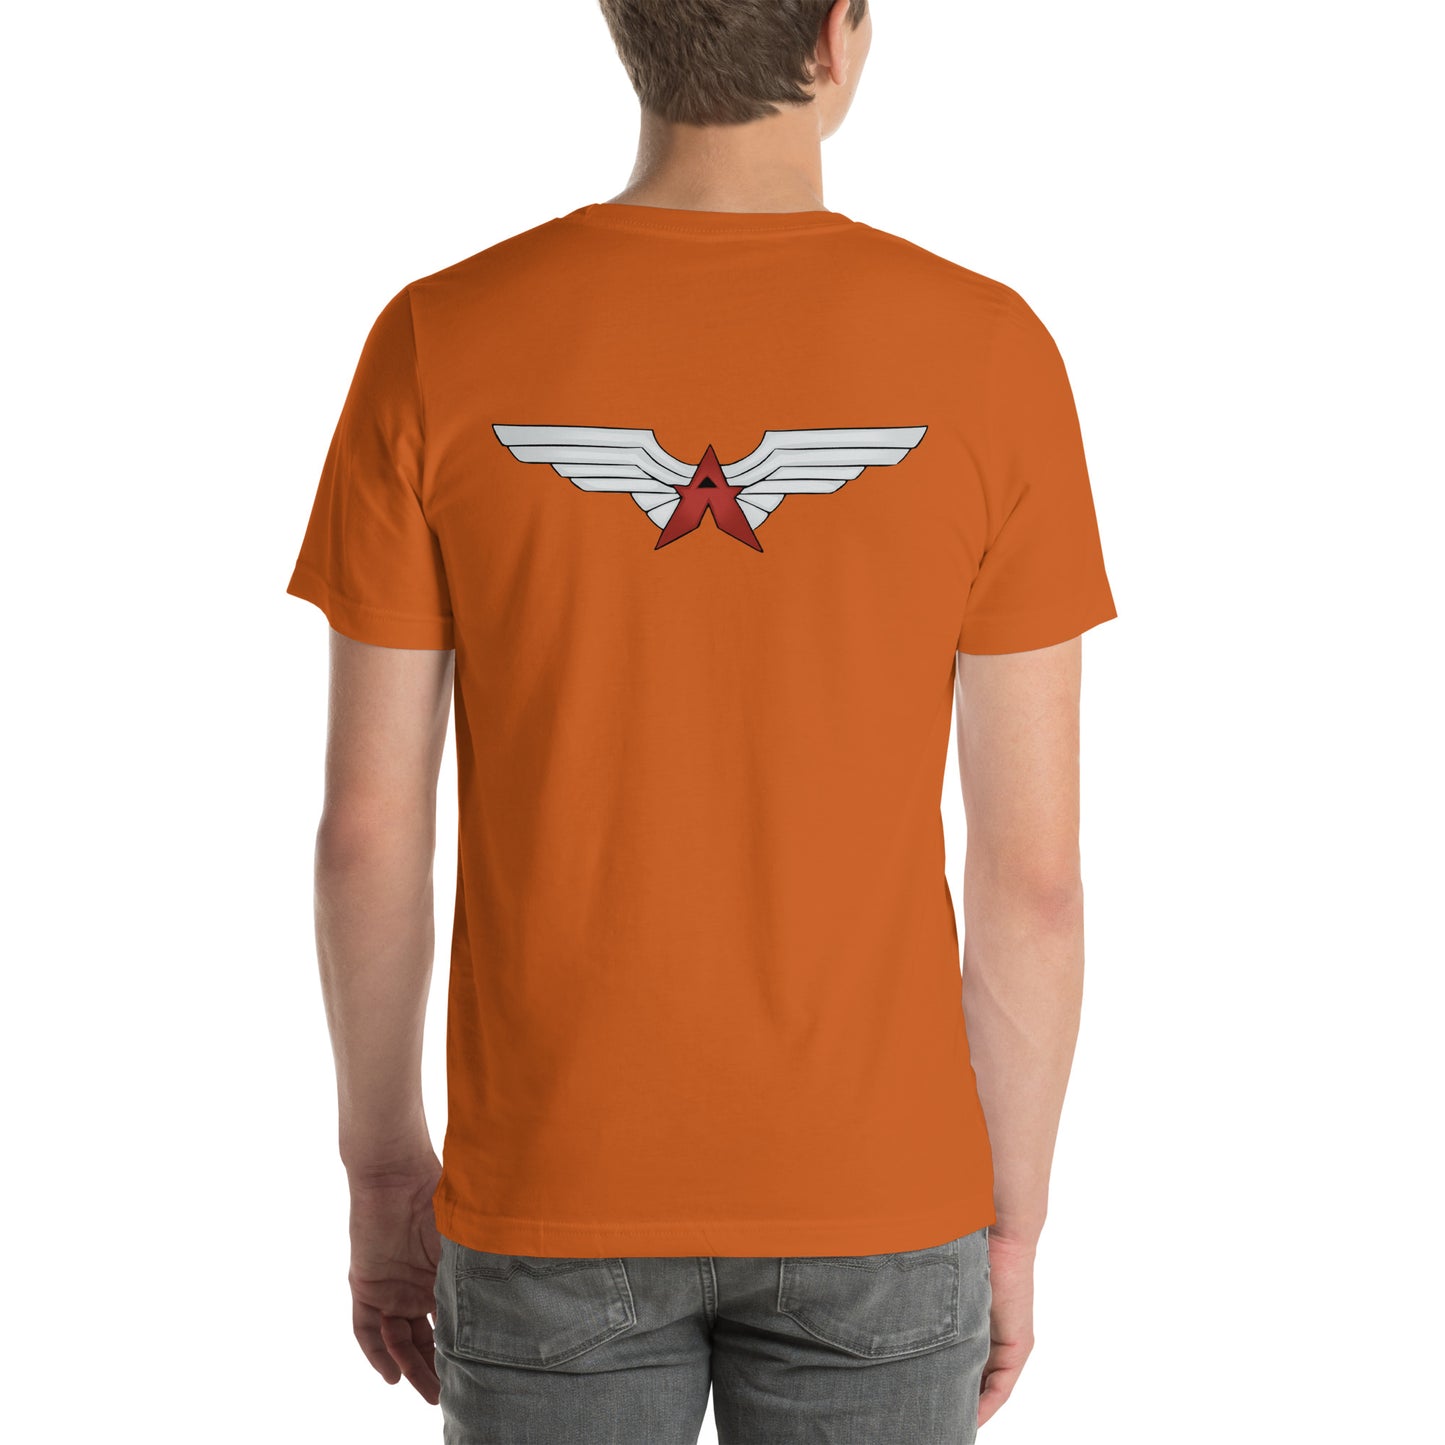 NAT the MERC: Do you feel lucky Punk? + Wings logo on back. Unisex t-shirt.